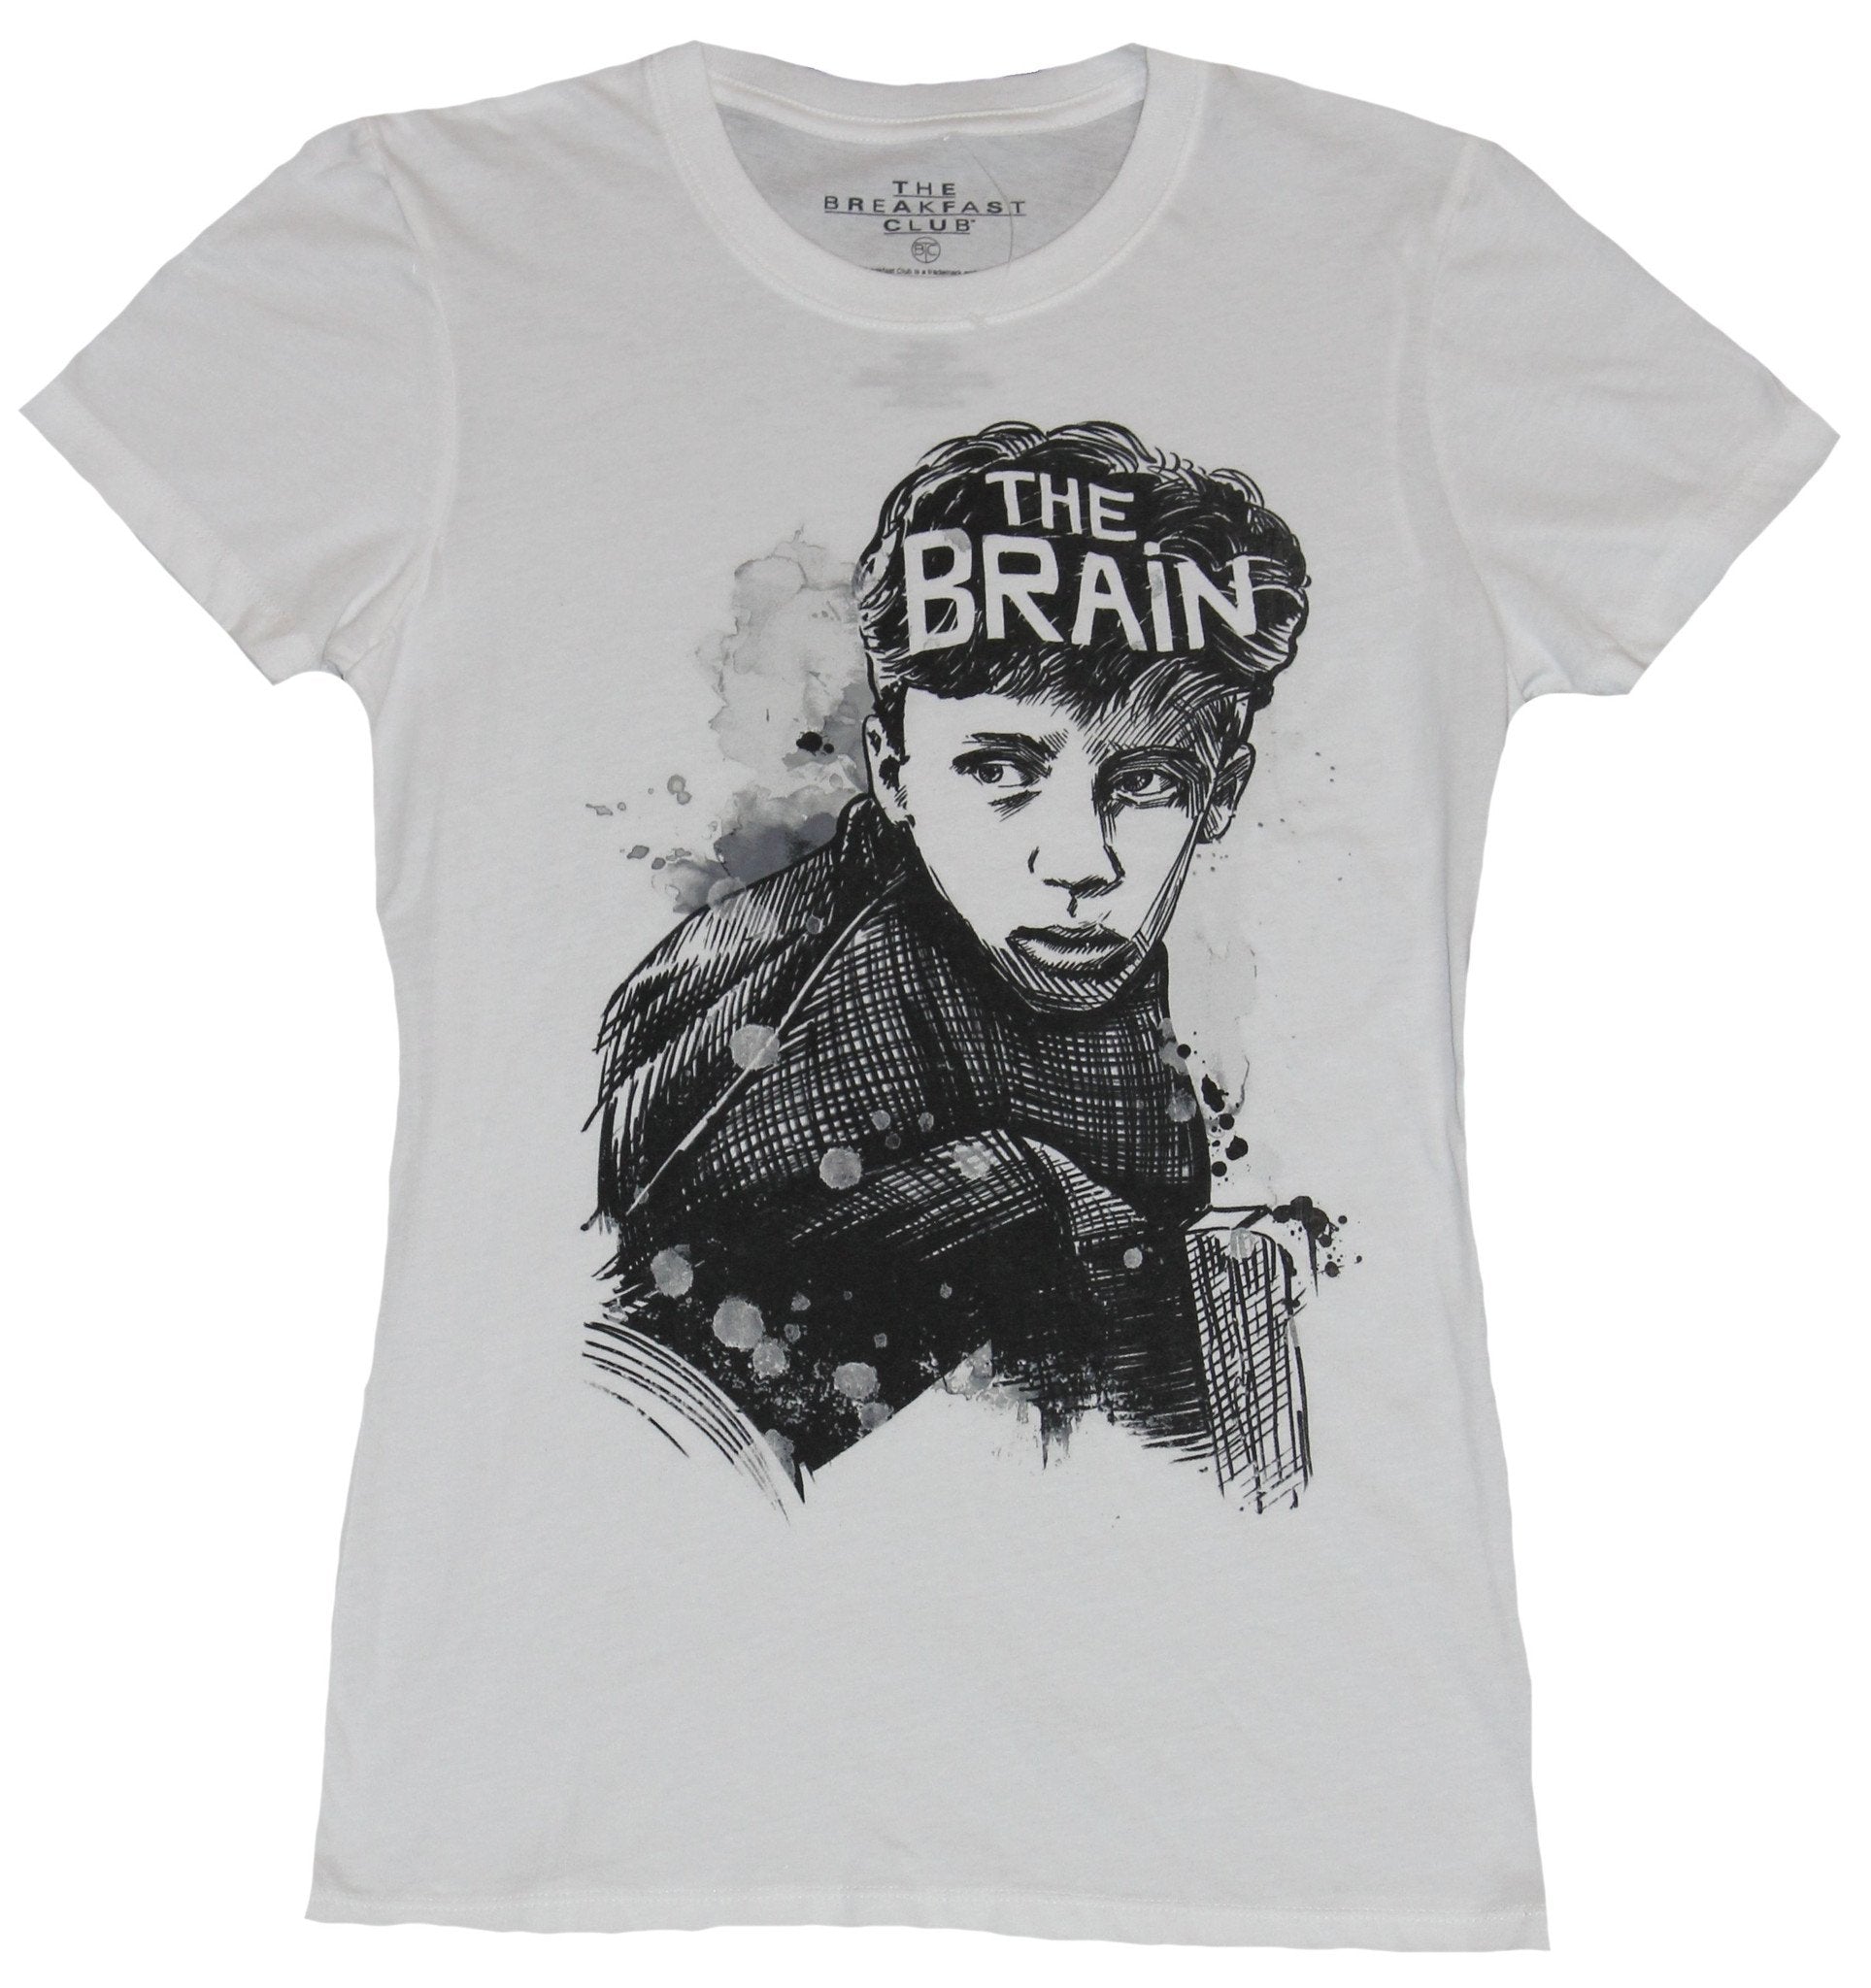 The Breakfast Club Girls Juniors T-Shirt - The Brain Artistic Sketch Image